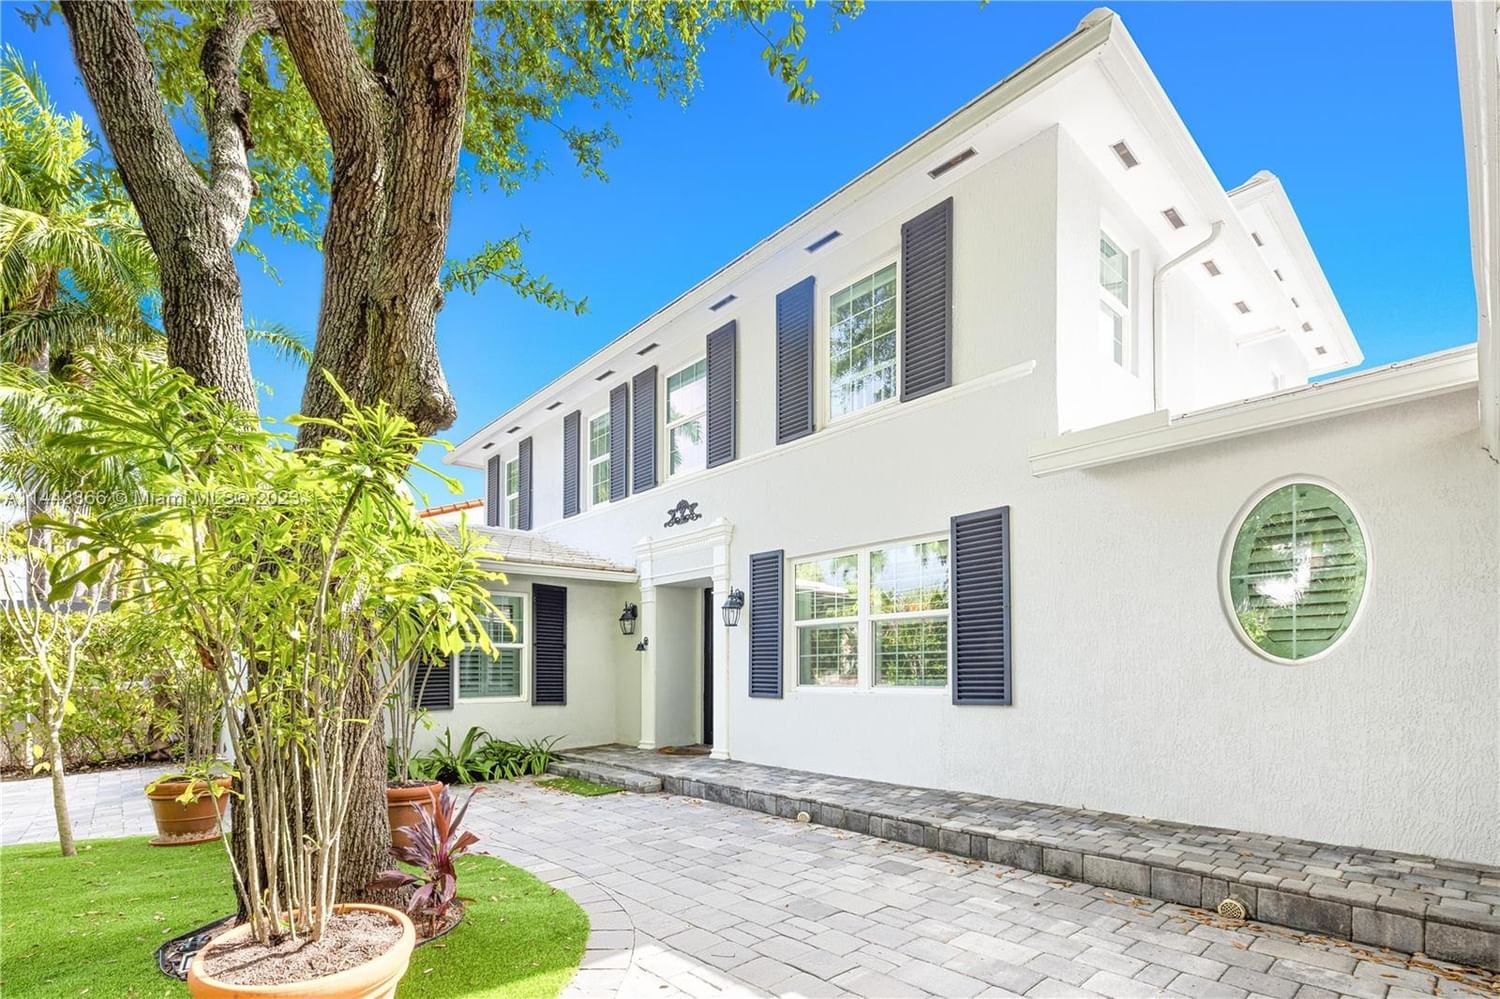 Real estate property located at 4531 Bay Rd, Miami-Dade County, Miami Beach, FL